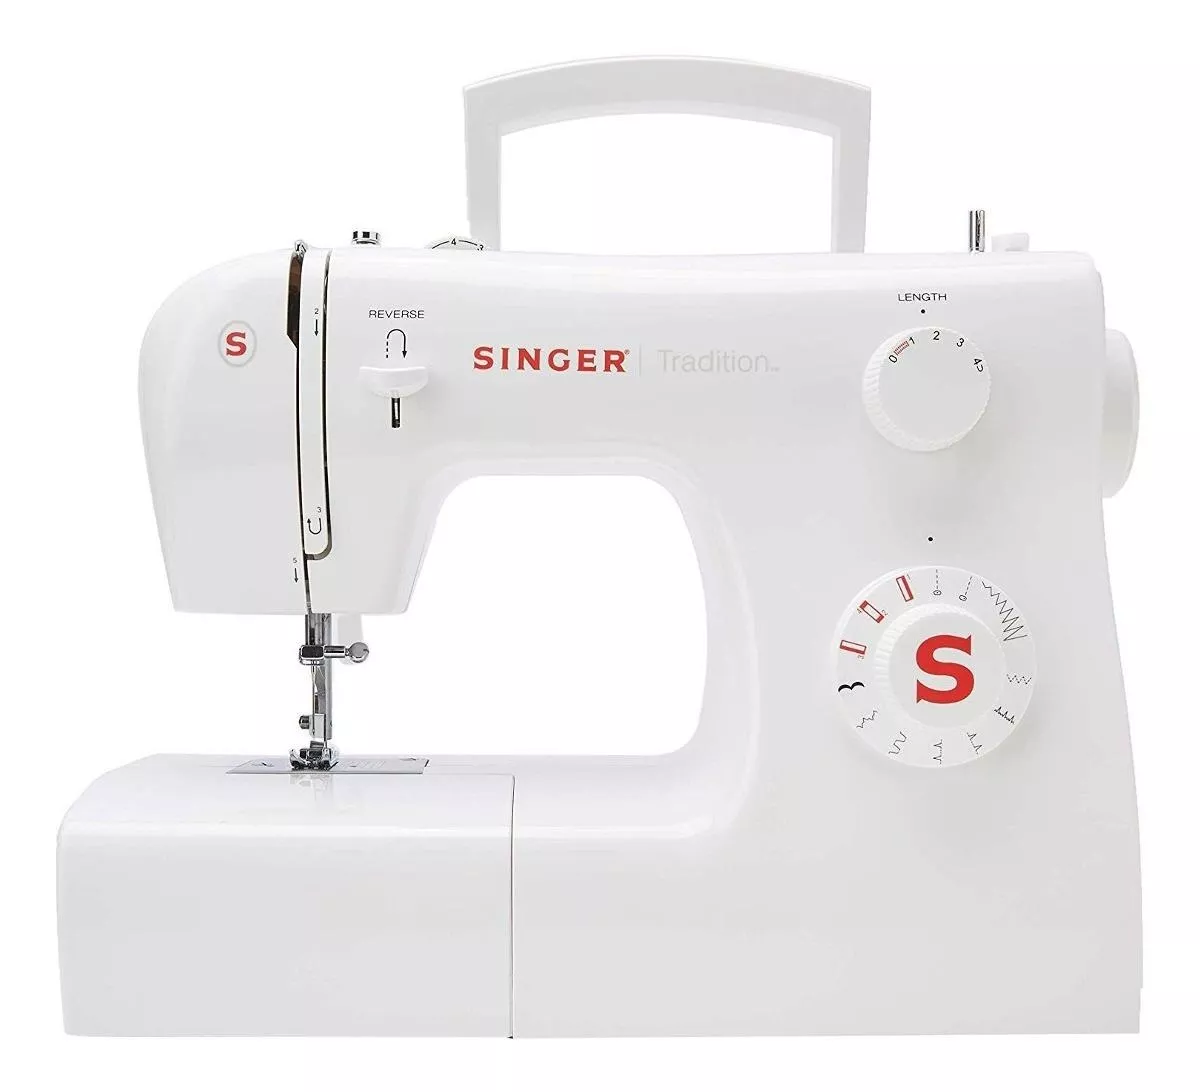 Segunda imagen para búsqueda de maquina de coser singer